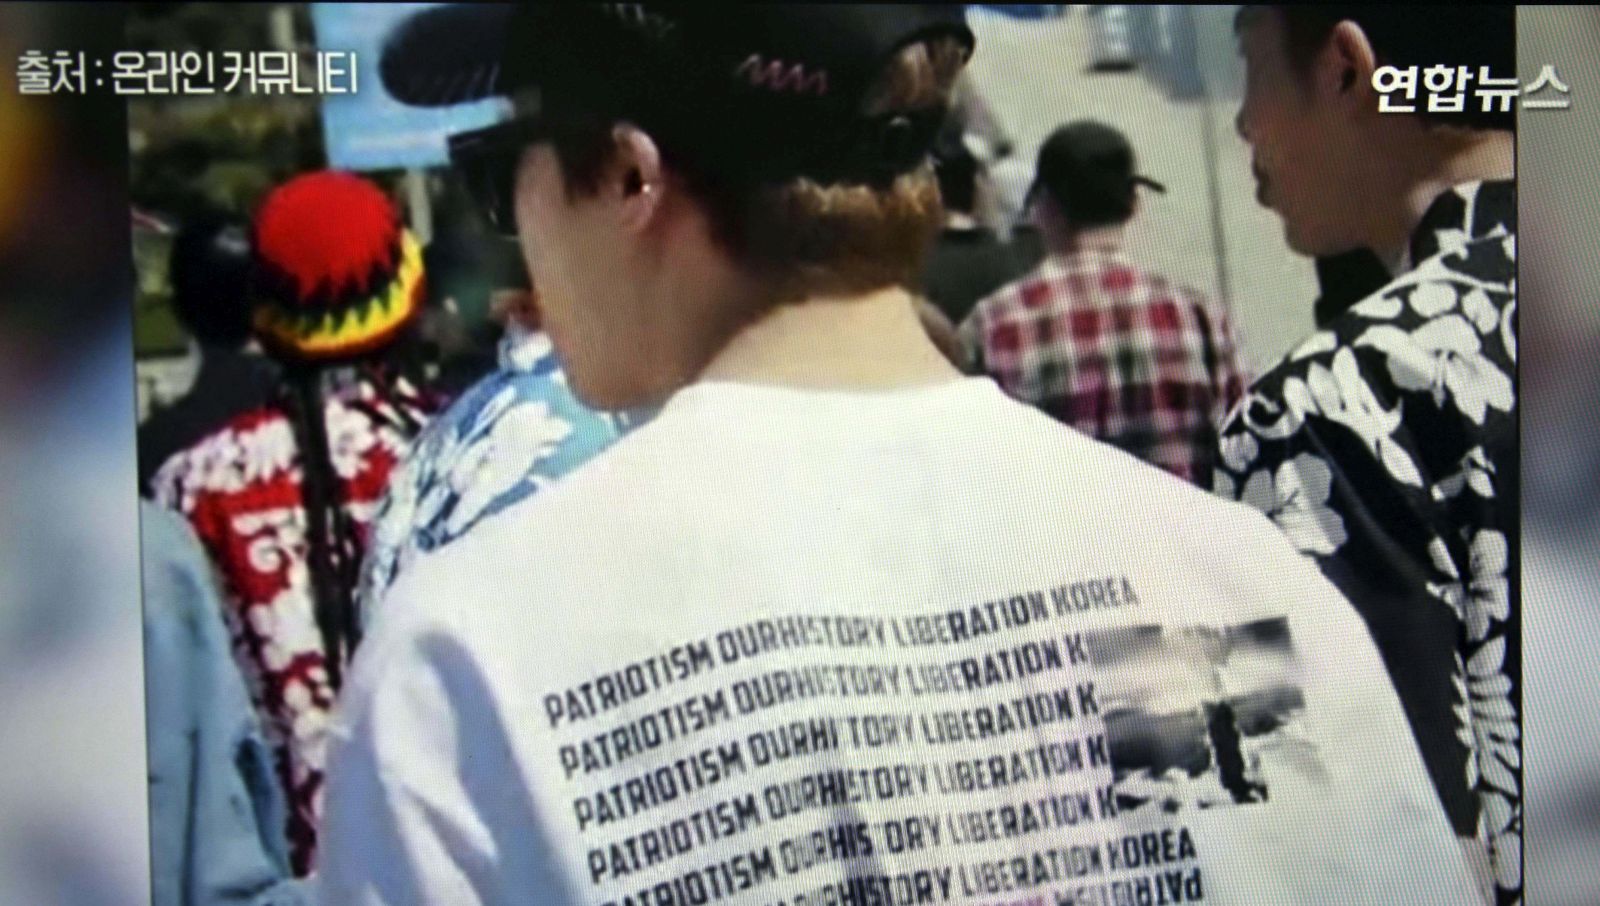 BTS T-shirt Controversy Shows Korea Needs to Study History